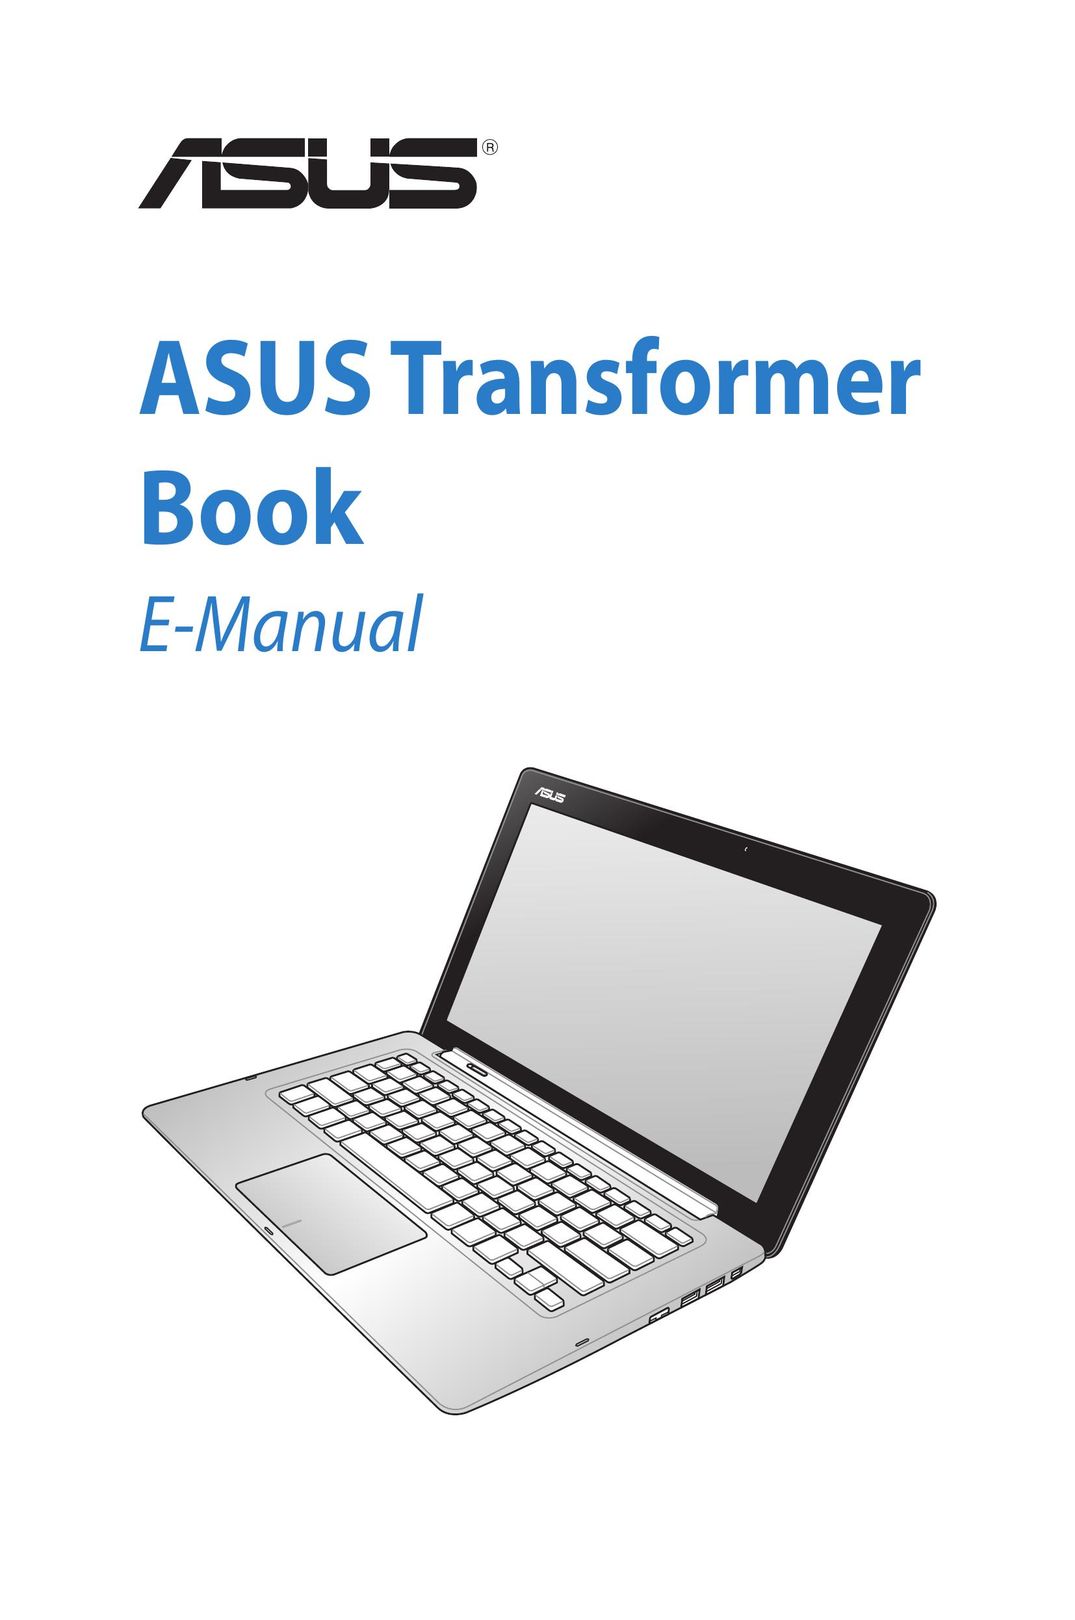 Asus TX300CADH71T Graphics Tablet User Manual